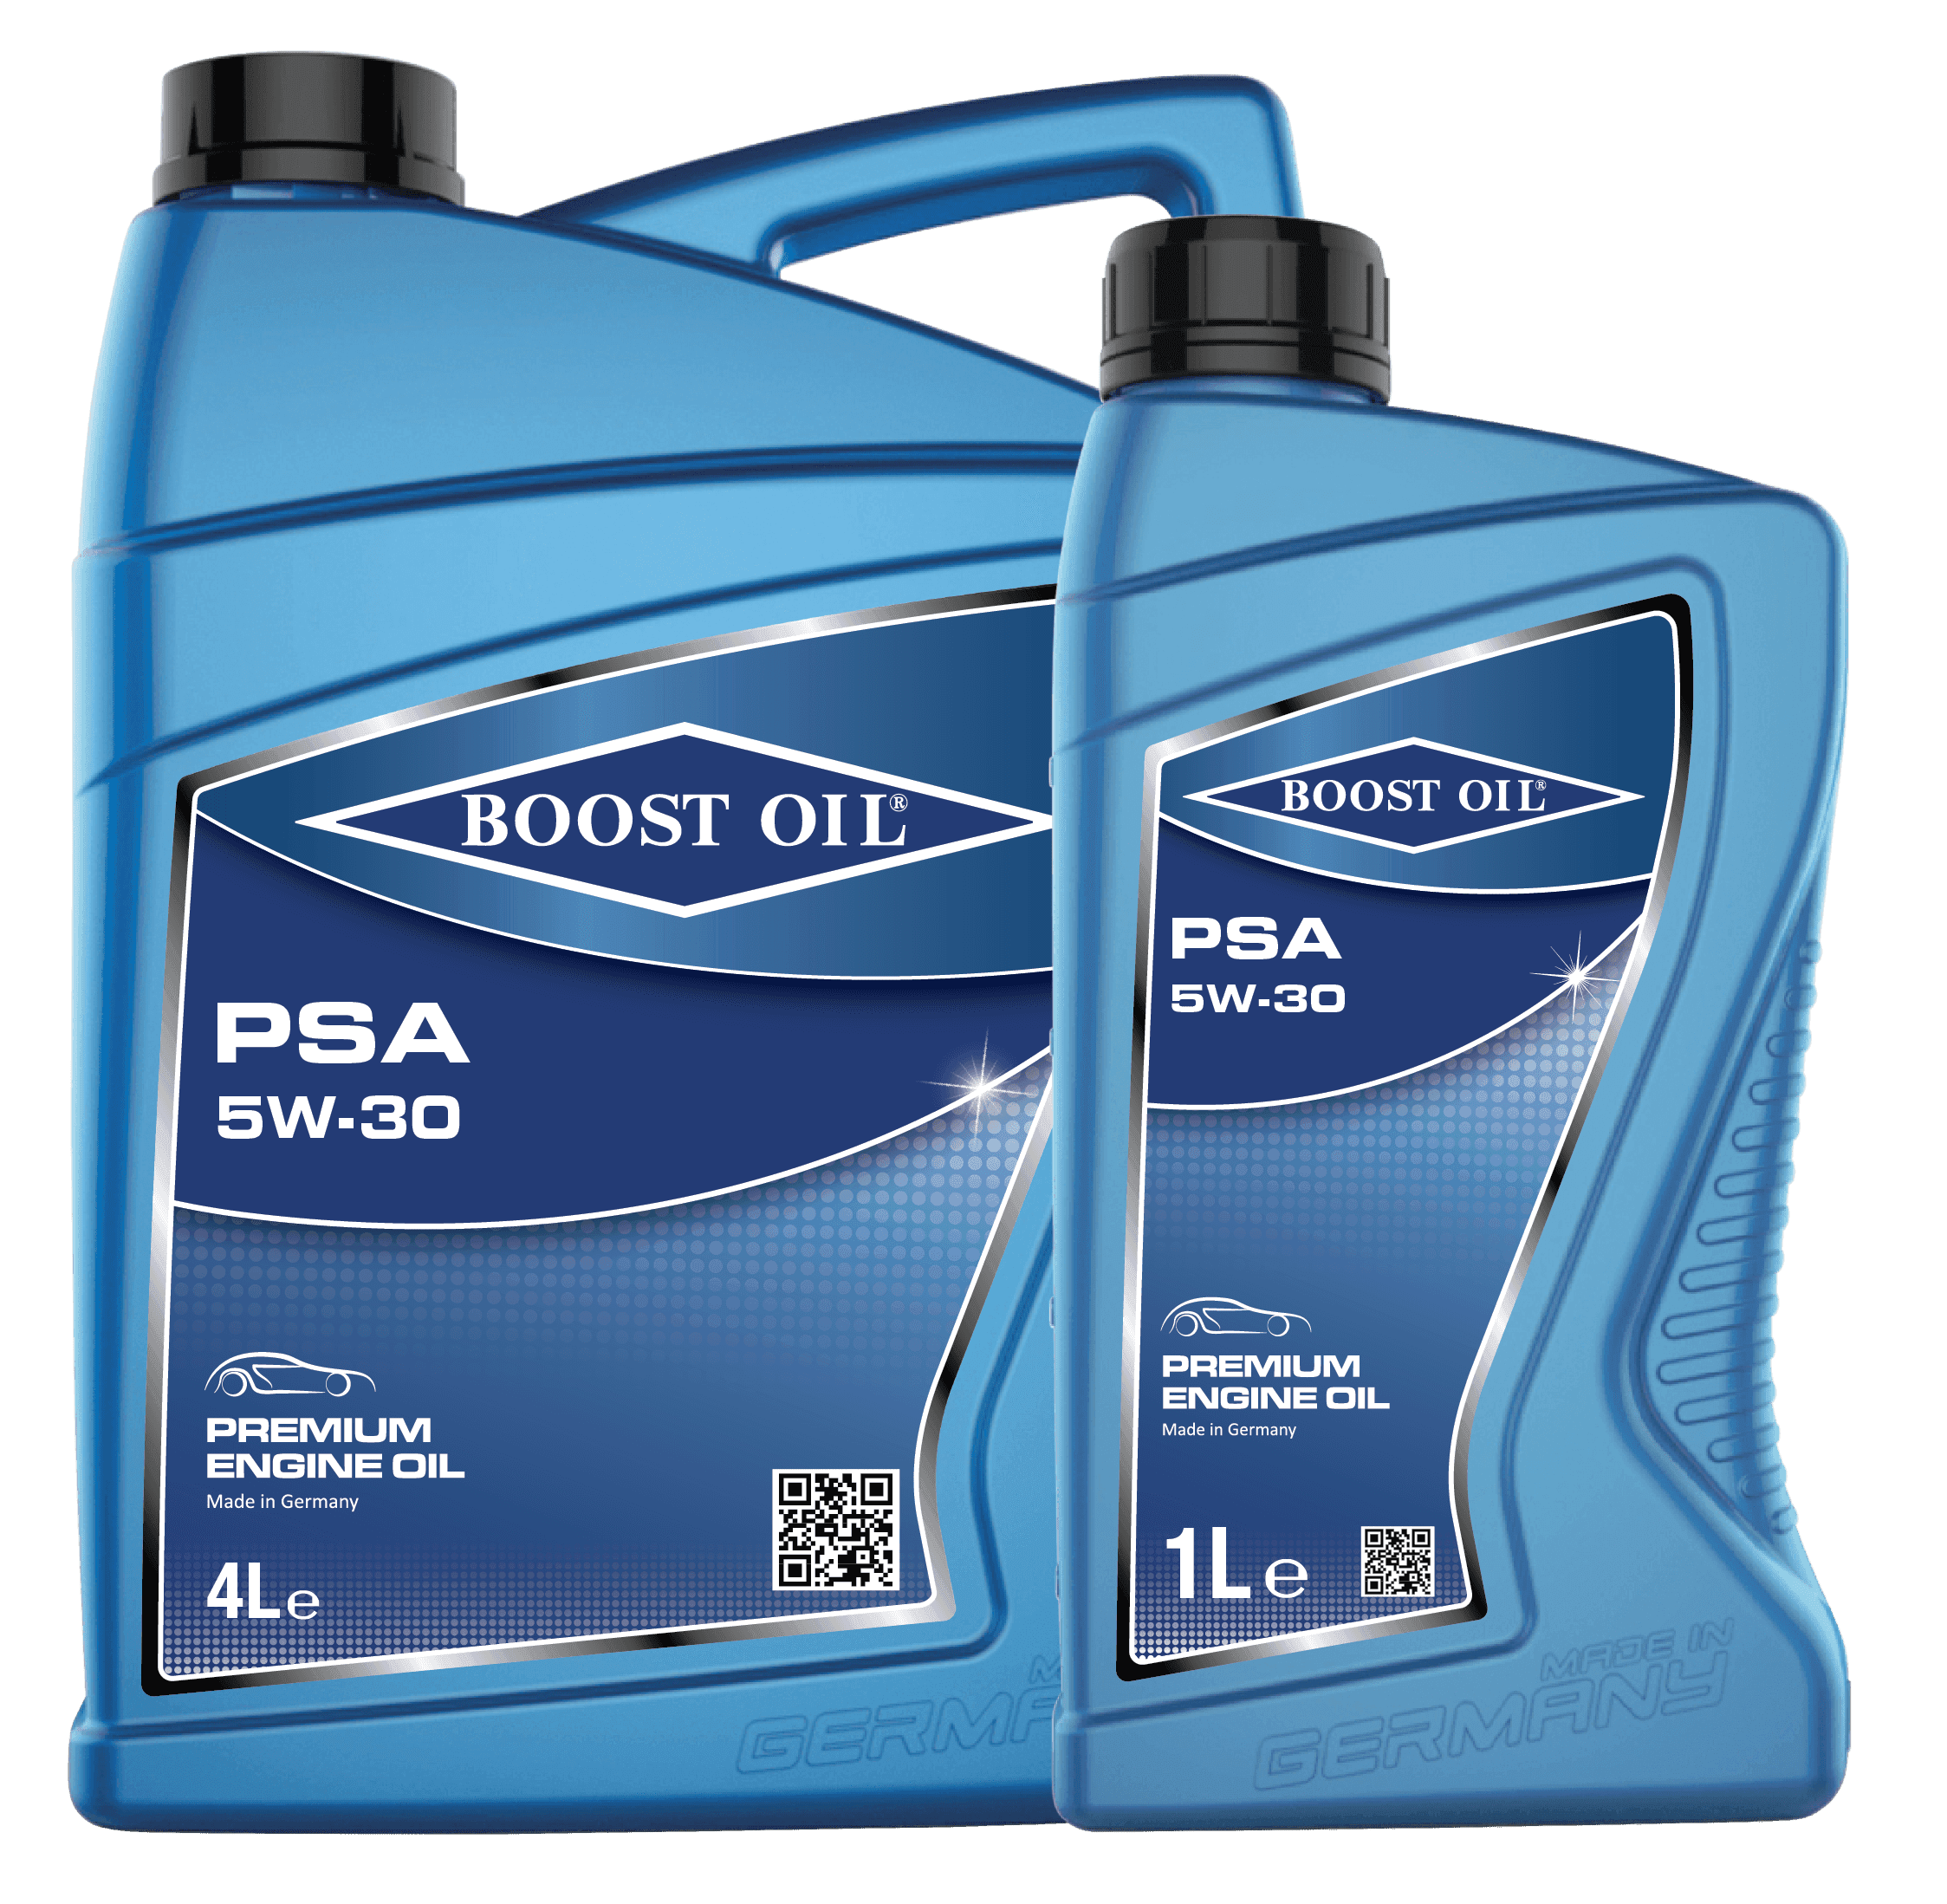 Product BOOST OIL PSA 5W-30 - Boostoil image